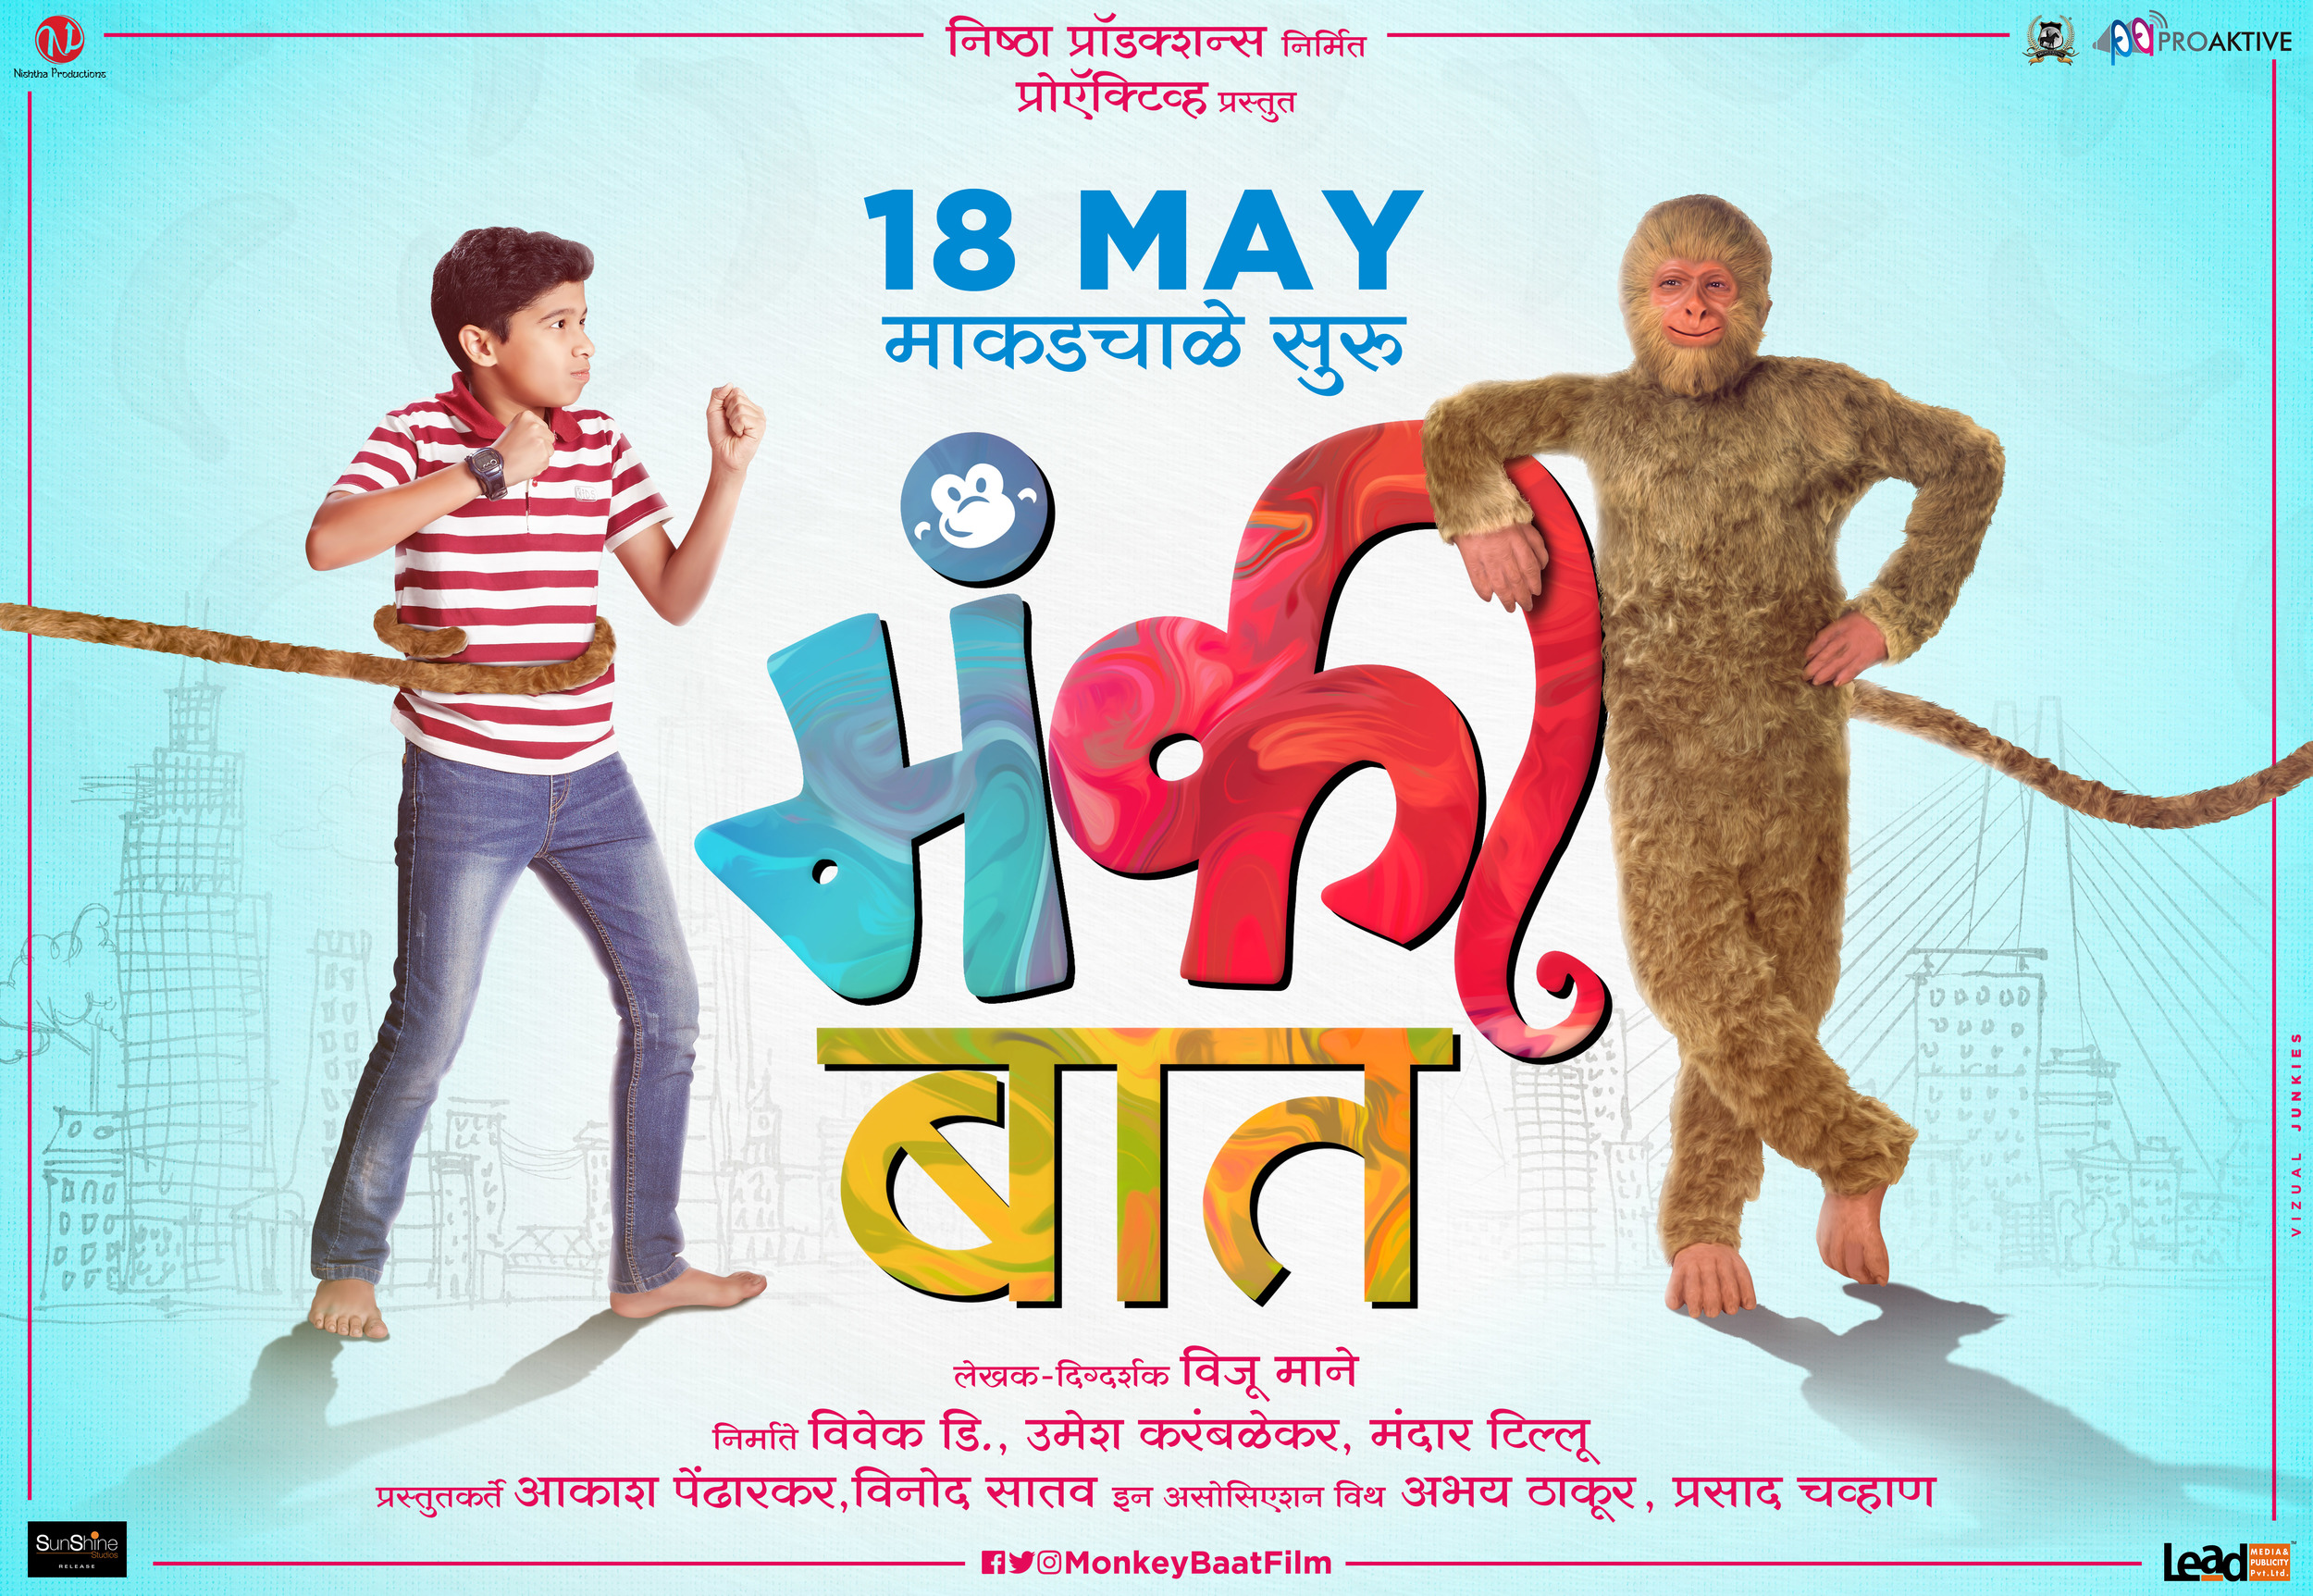 Mega Sized Movie Poster Image for Monkey Baat (#3 of 4)